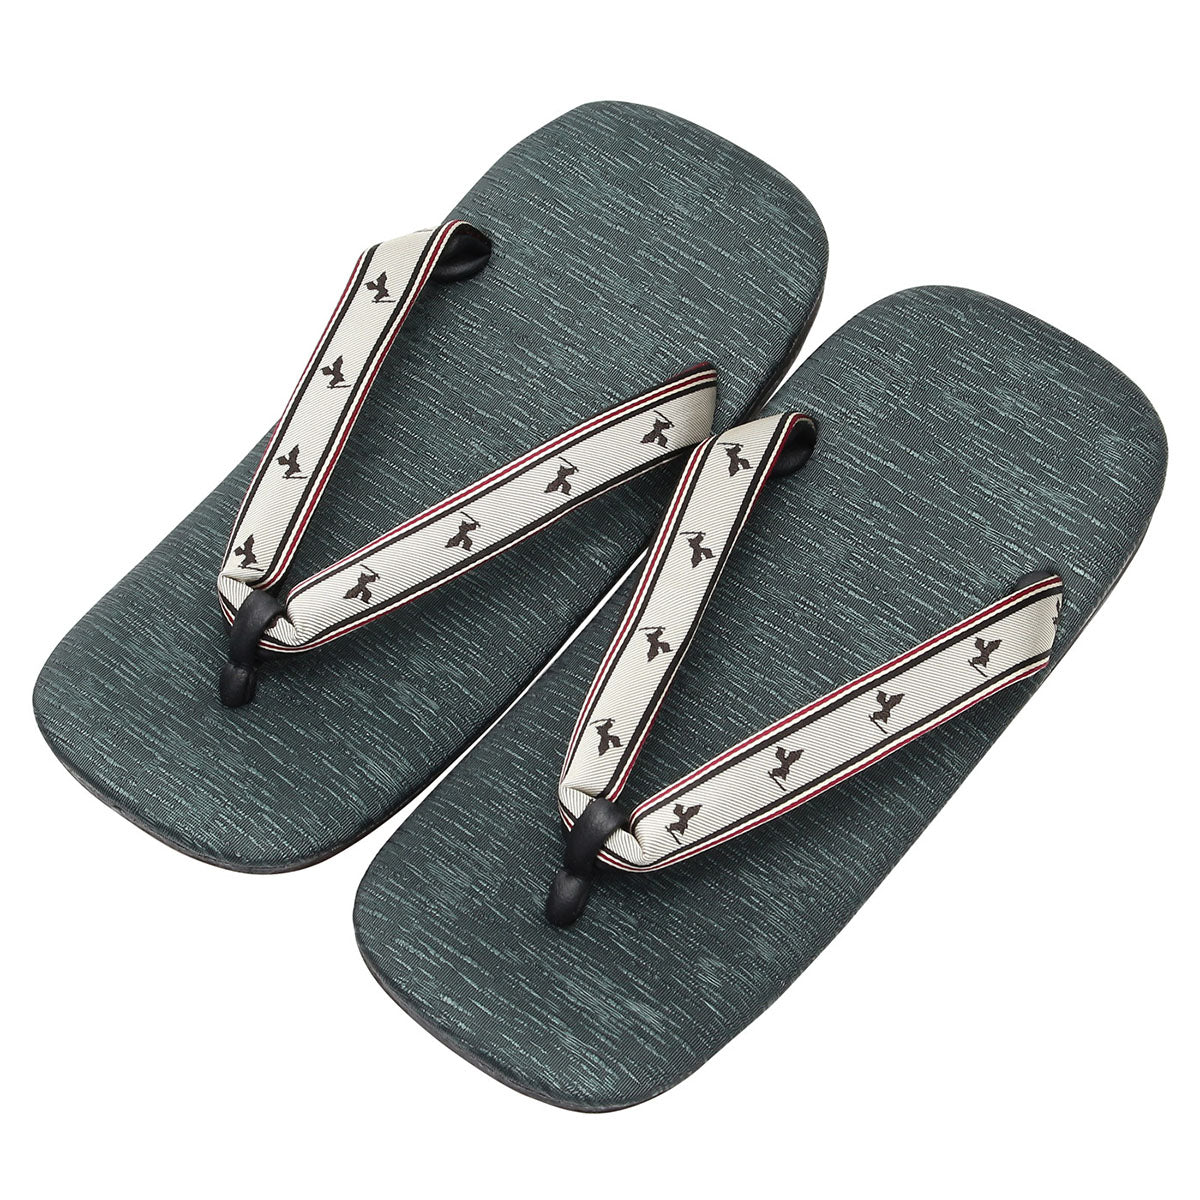 Men's Japanese Leather Soled Geta & Zori Sandals flip-flops Handmade with Silk Thongs -16. Samurai FORTUNA Tokyo